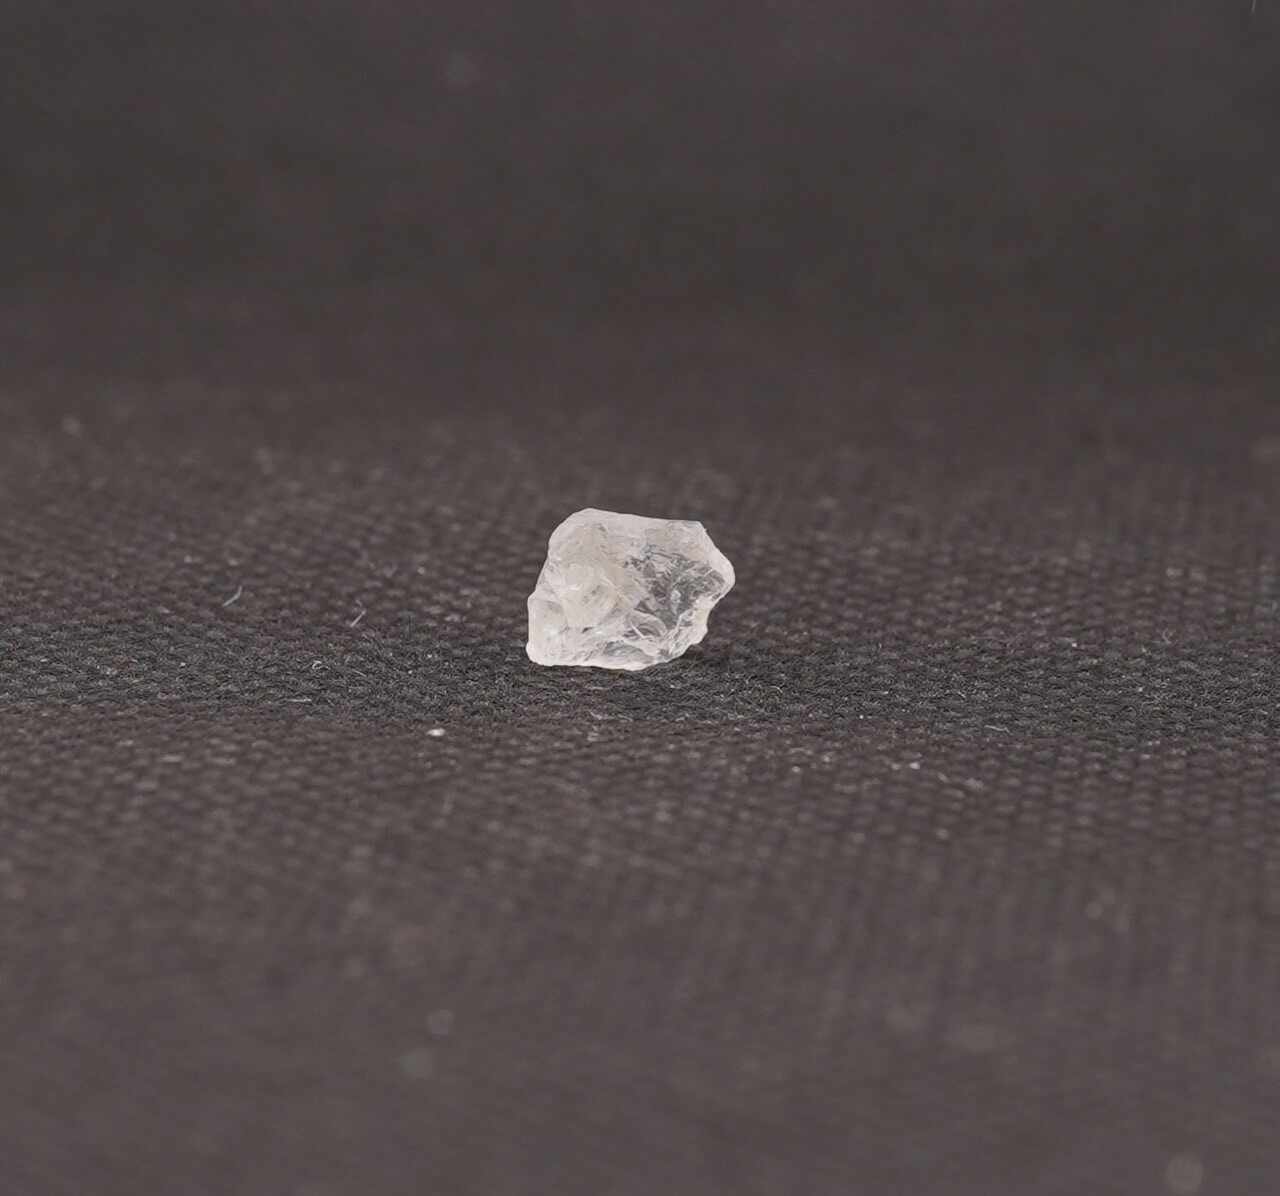 Fenacit nigerian cristal natural unicat f329